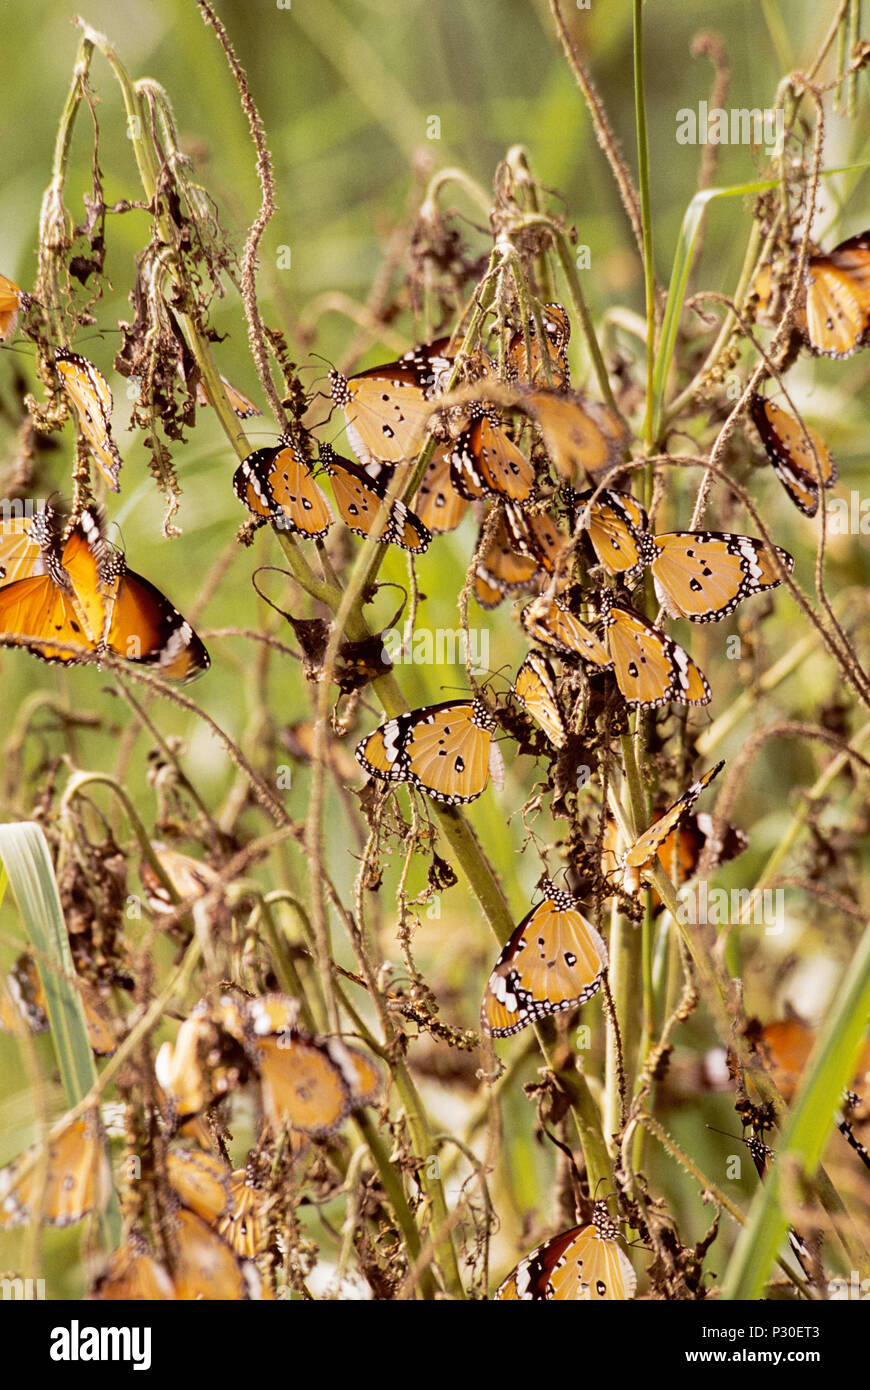 Colonie de Plain Tiger papillons,(Danaus chrysippe), Parc national de Keoladeo Ghana, Bharatpur, Rajasthan, Inde Banque D'Images